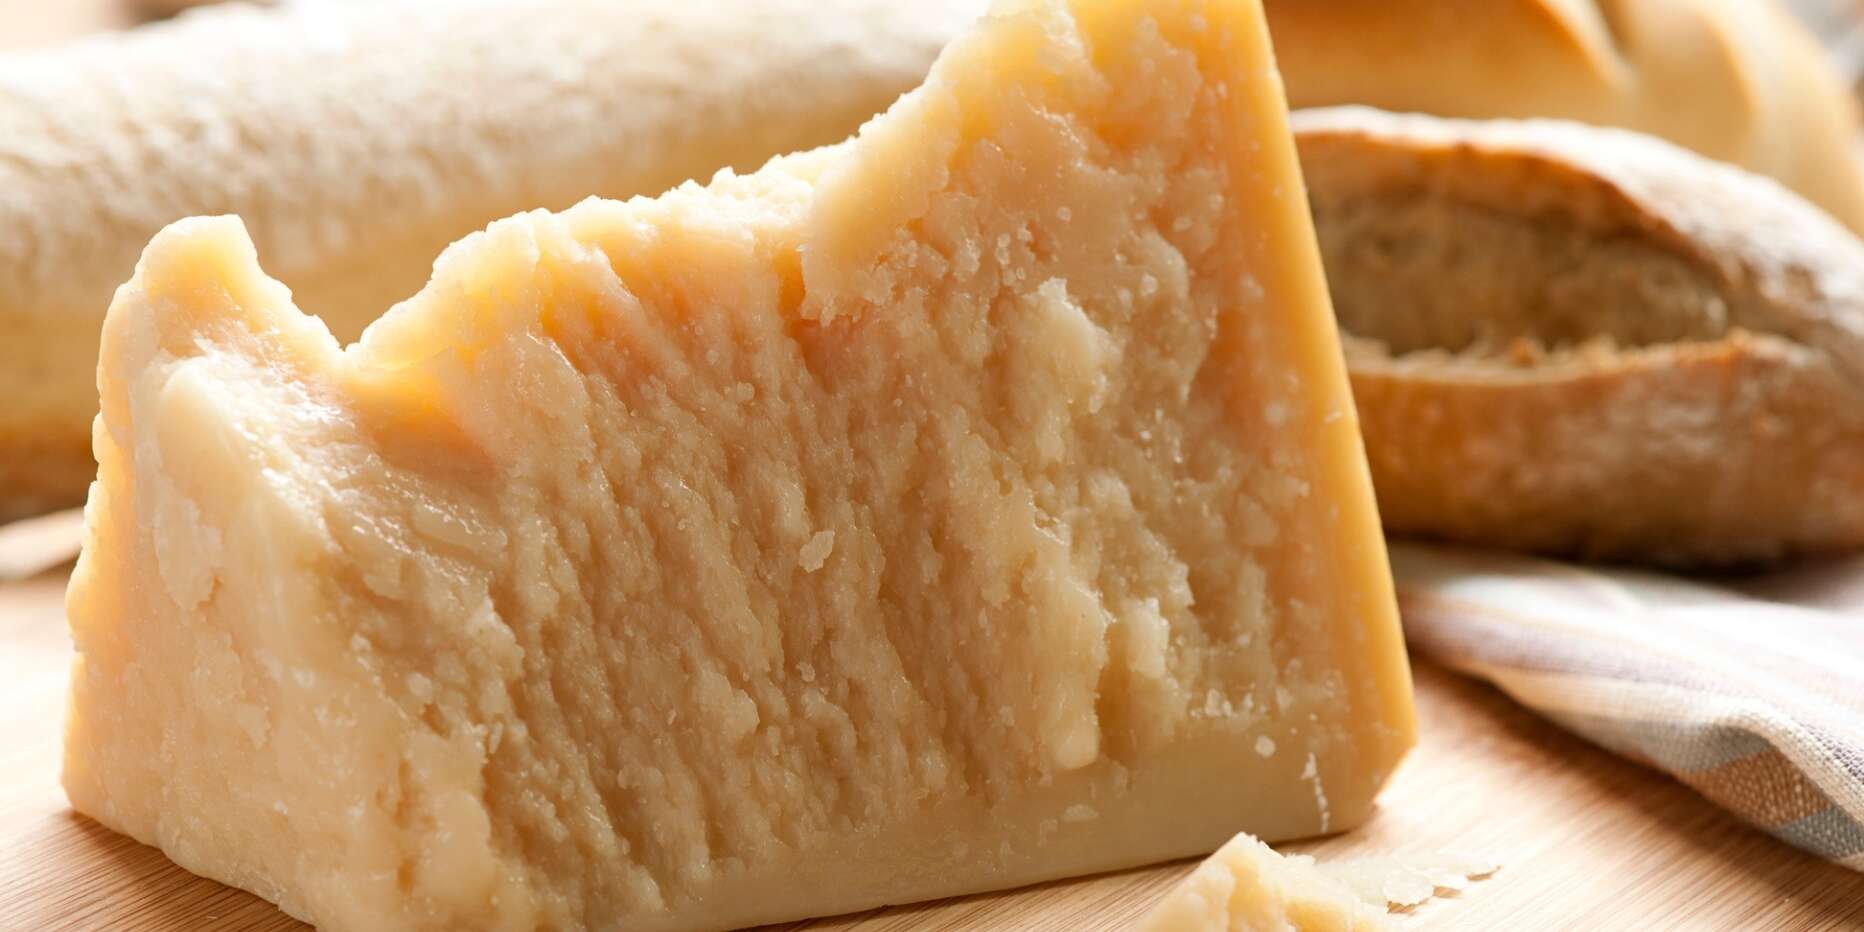 Parmesan Black Wax Cheese